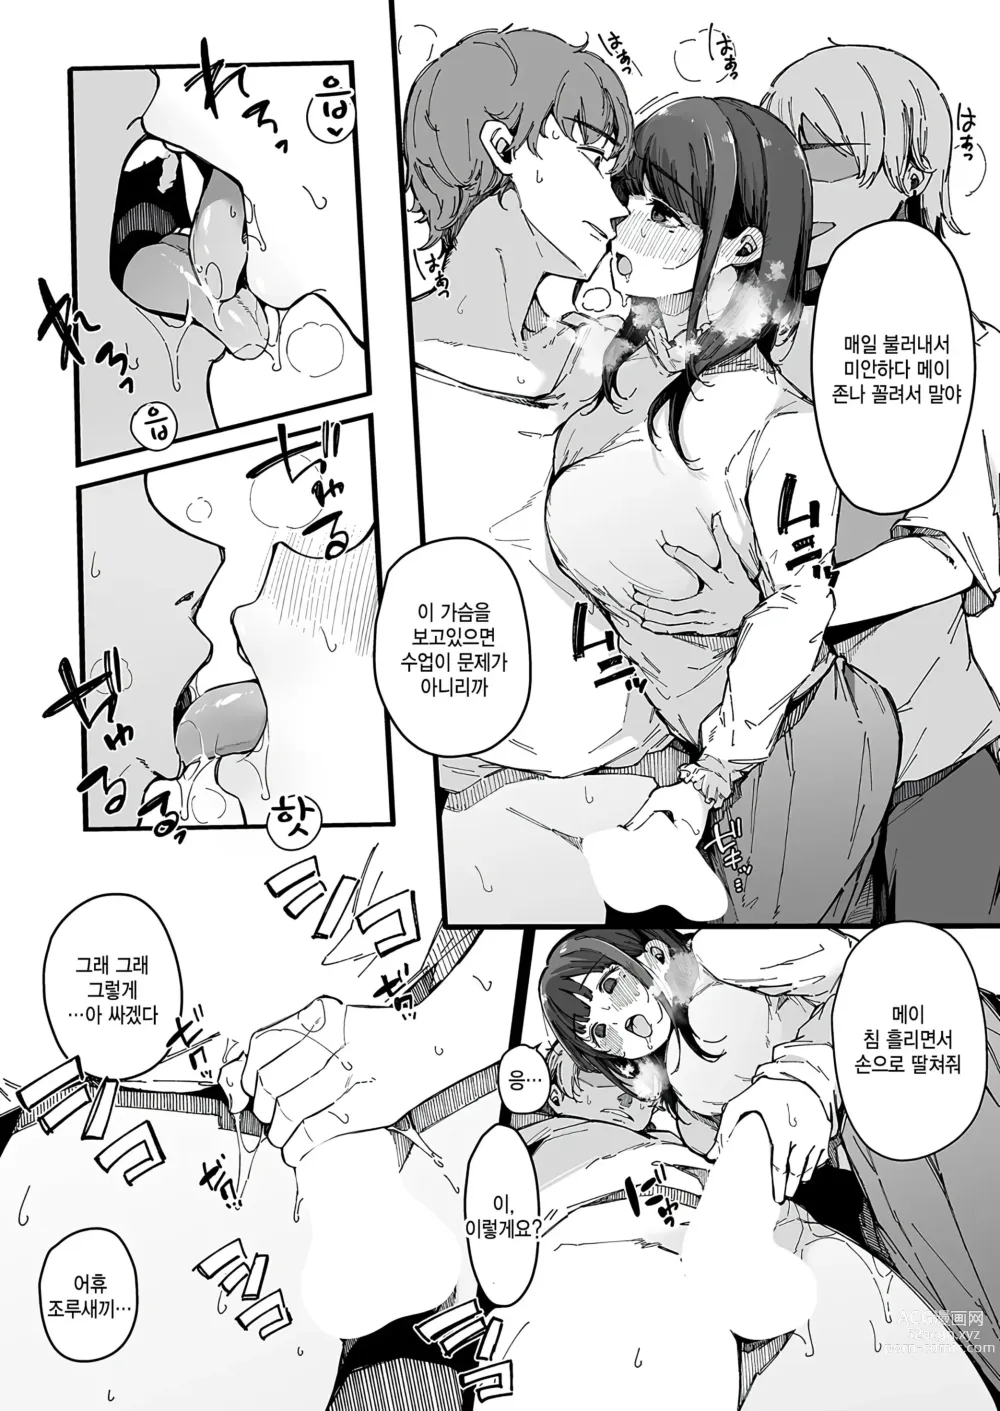 Page 7 of manga Machisi Musume mo Utsuroi ni